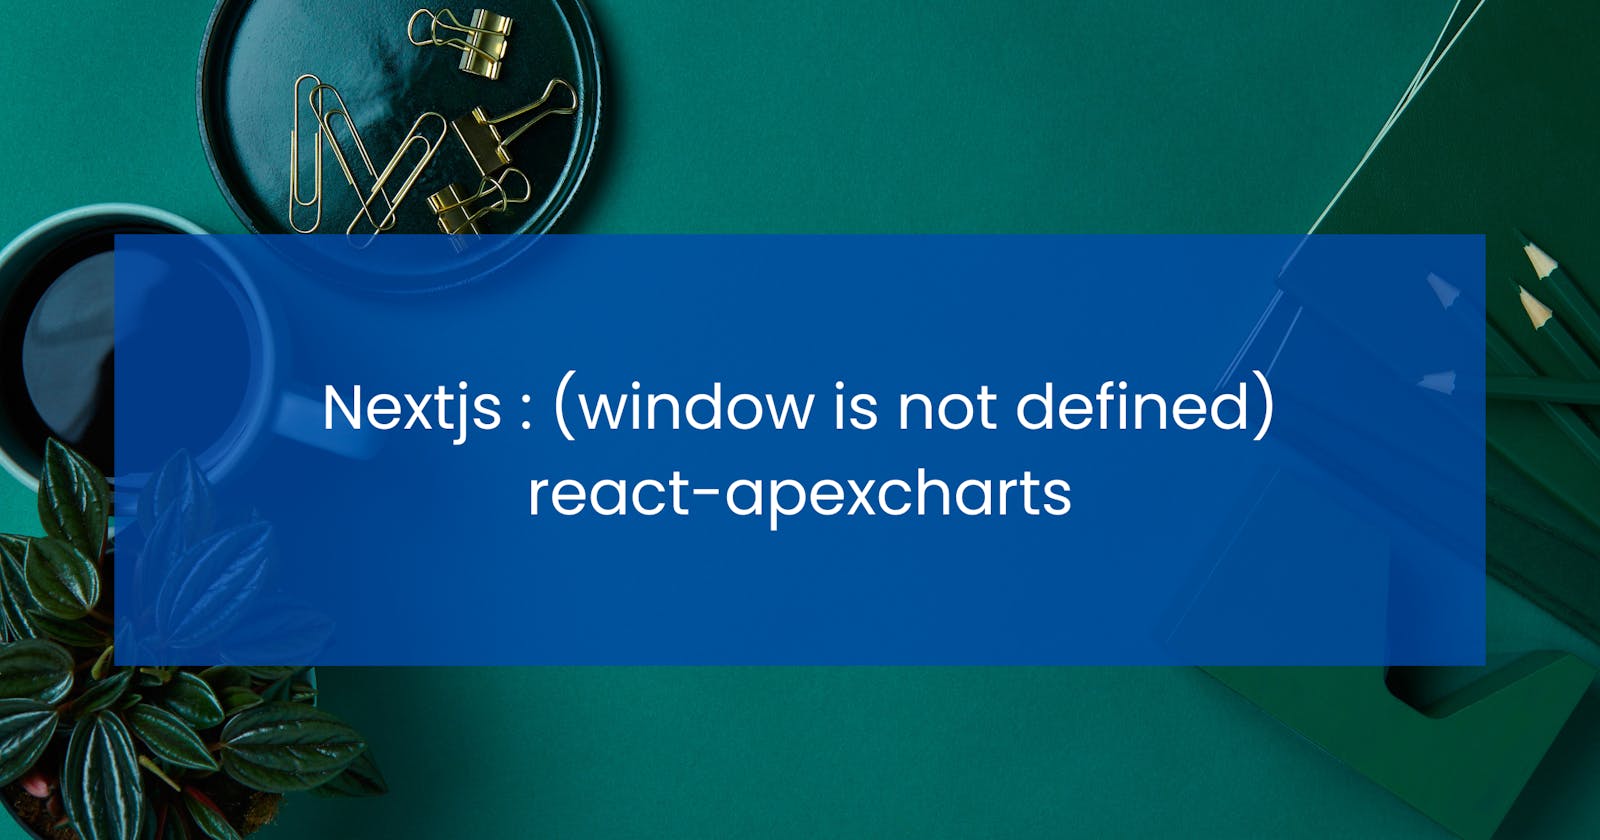 Nextjs : (window is not defined) react-apexcharts